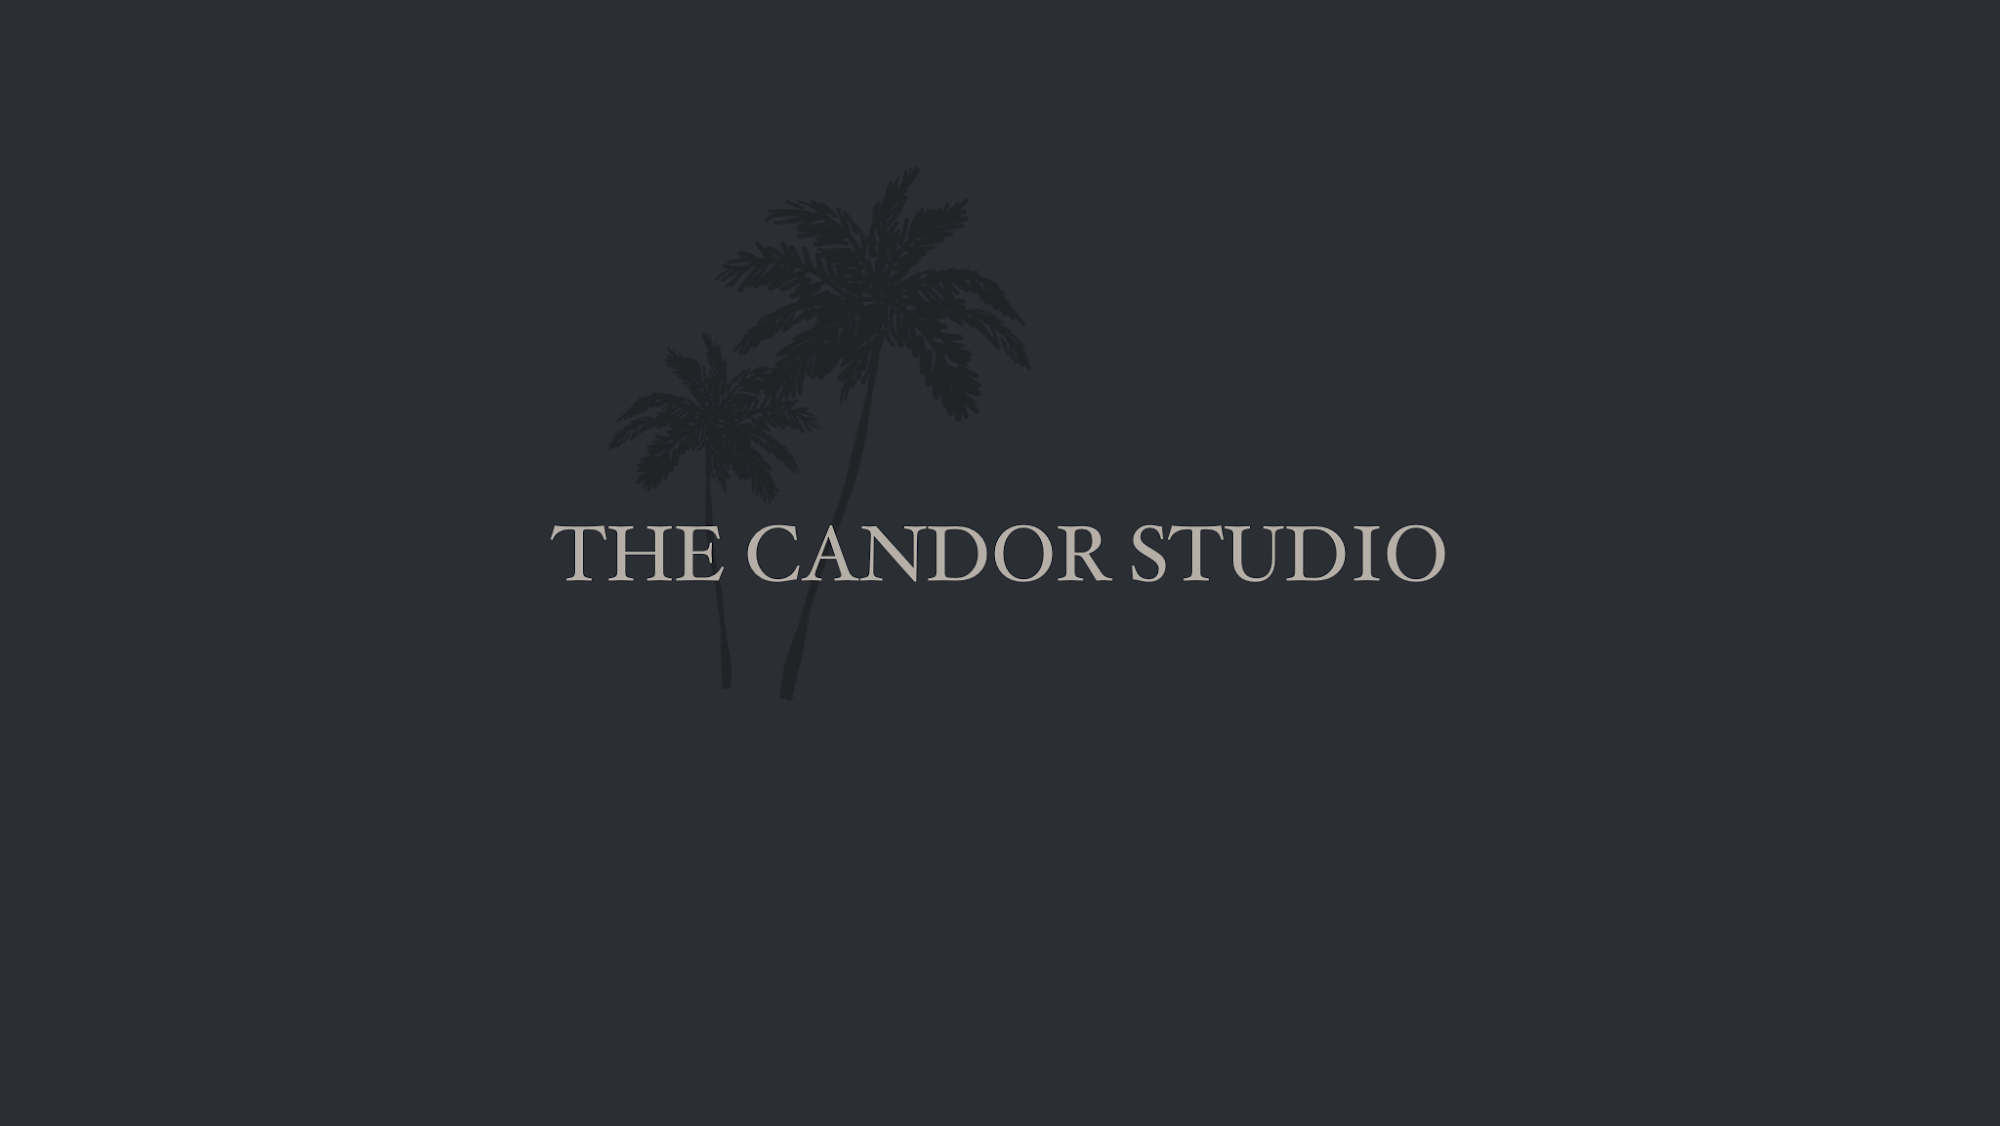 The Candor Studio